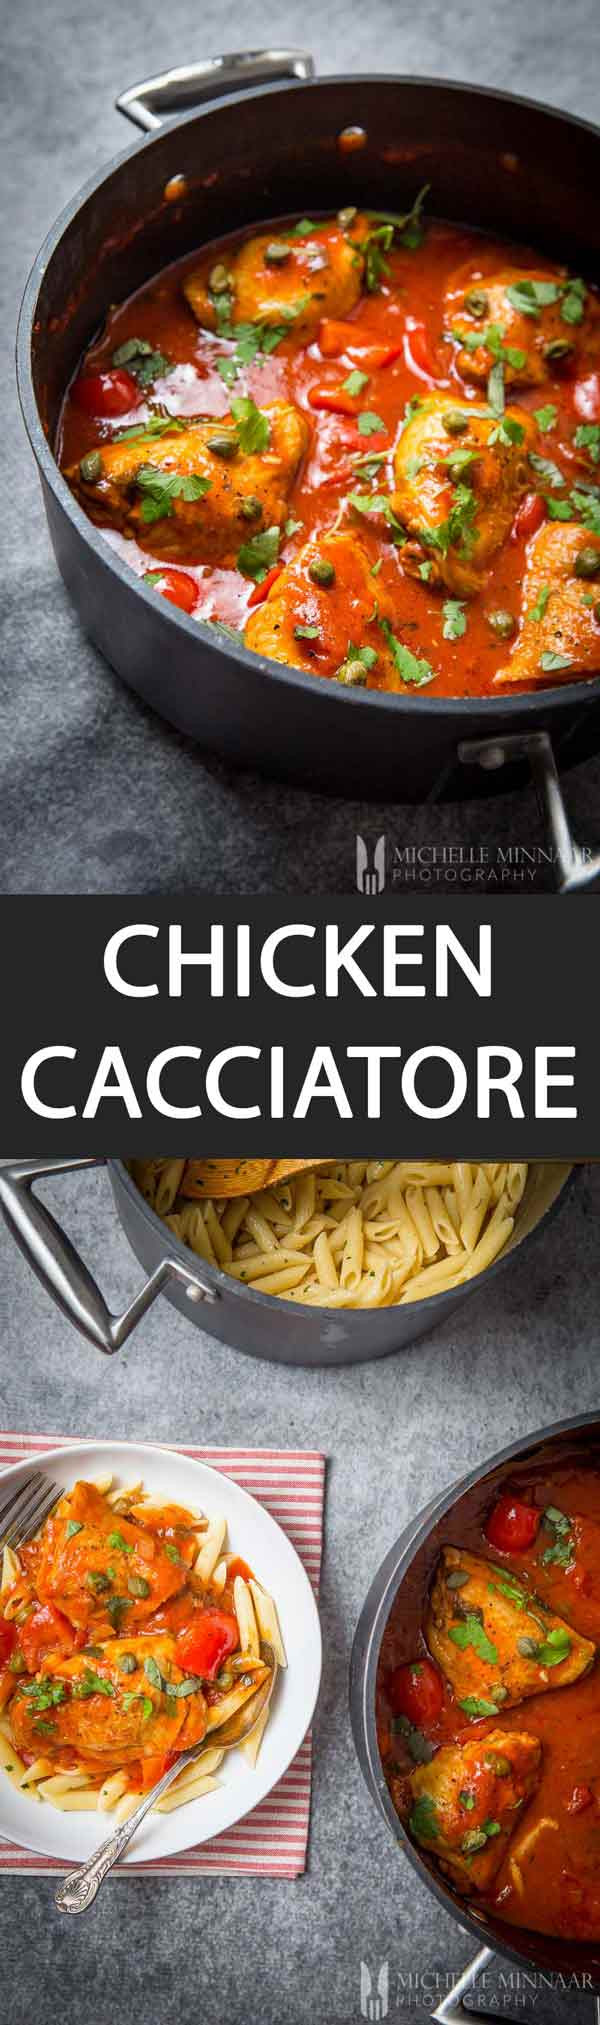 Authentic Italian Chicken Recipes
 Chicken Cacciatore An Authentic Italian Chicken Recipe